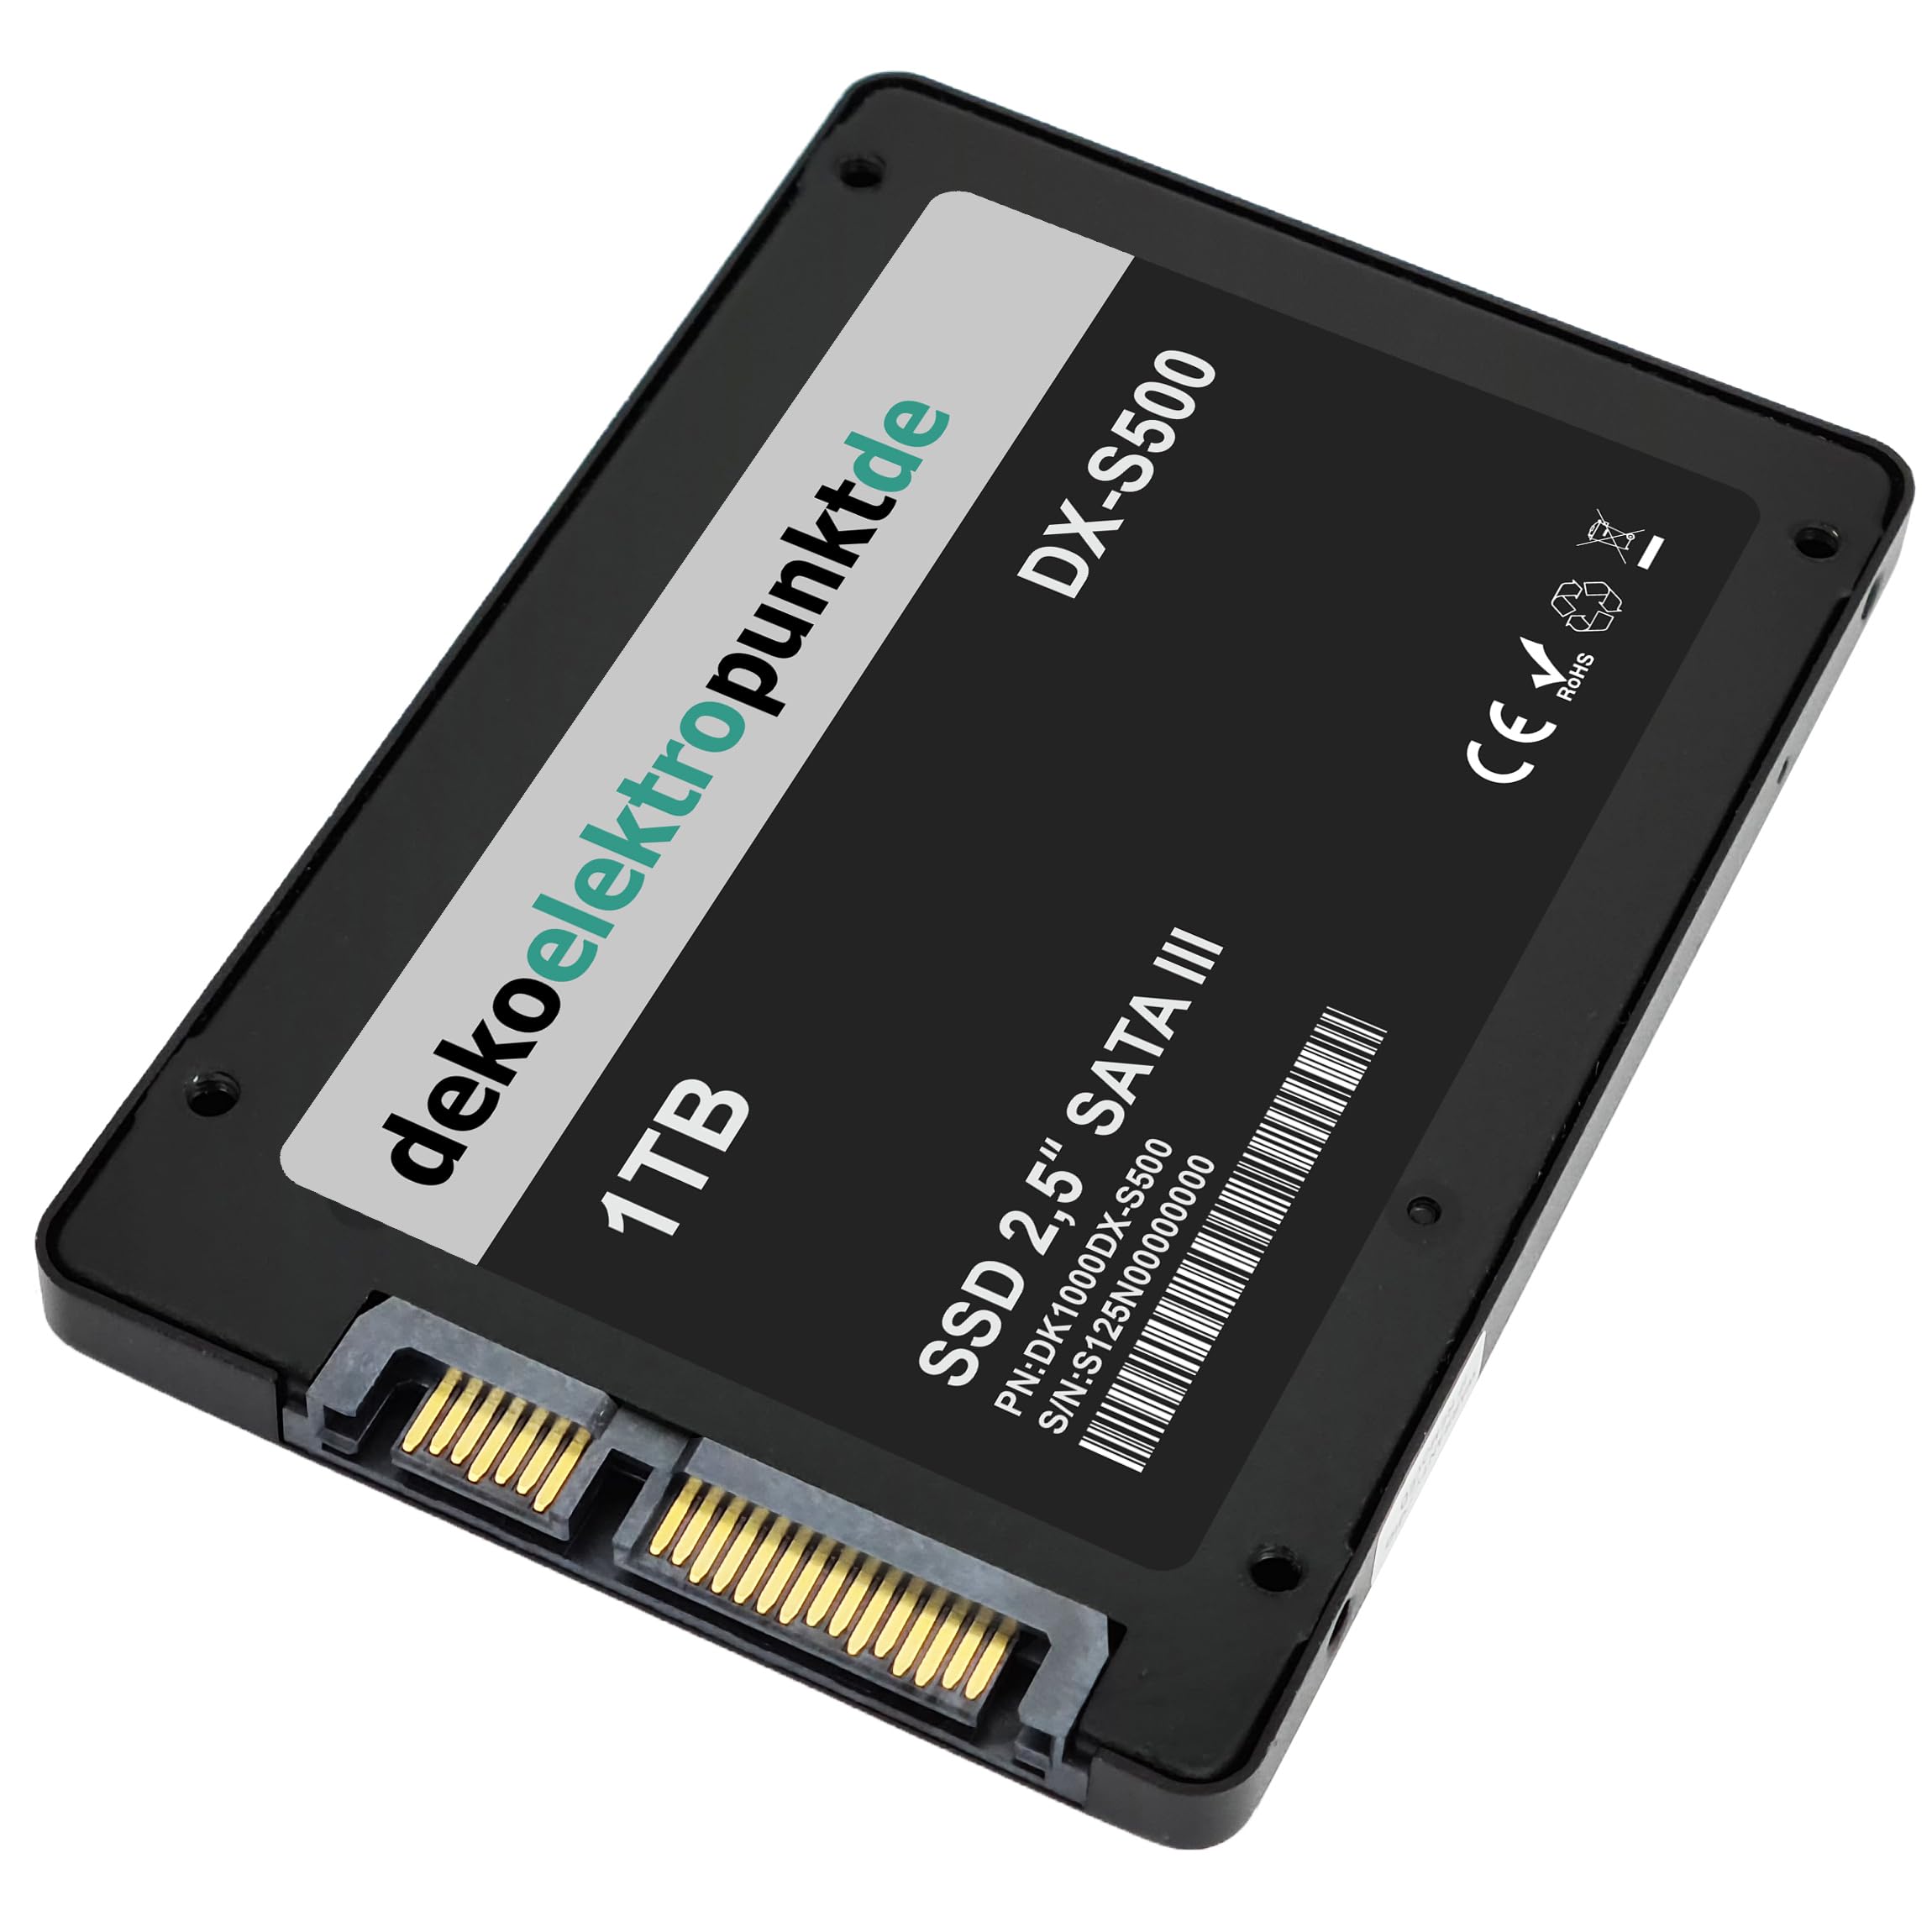 dekoelektropunktde 1TB SSD Festplatte passend für Sony Vaio VPC-EC2E9E/BJ, Alternatives Ersatzteil